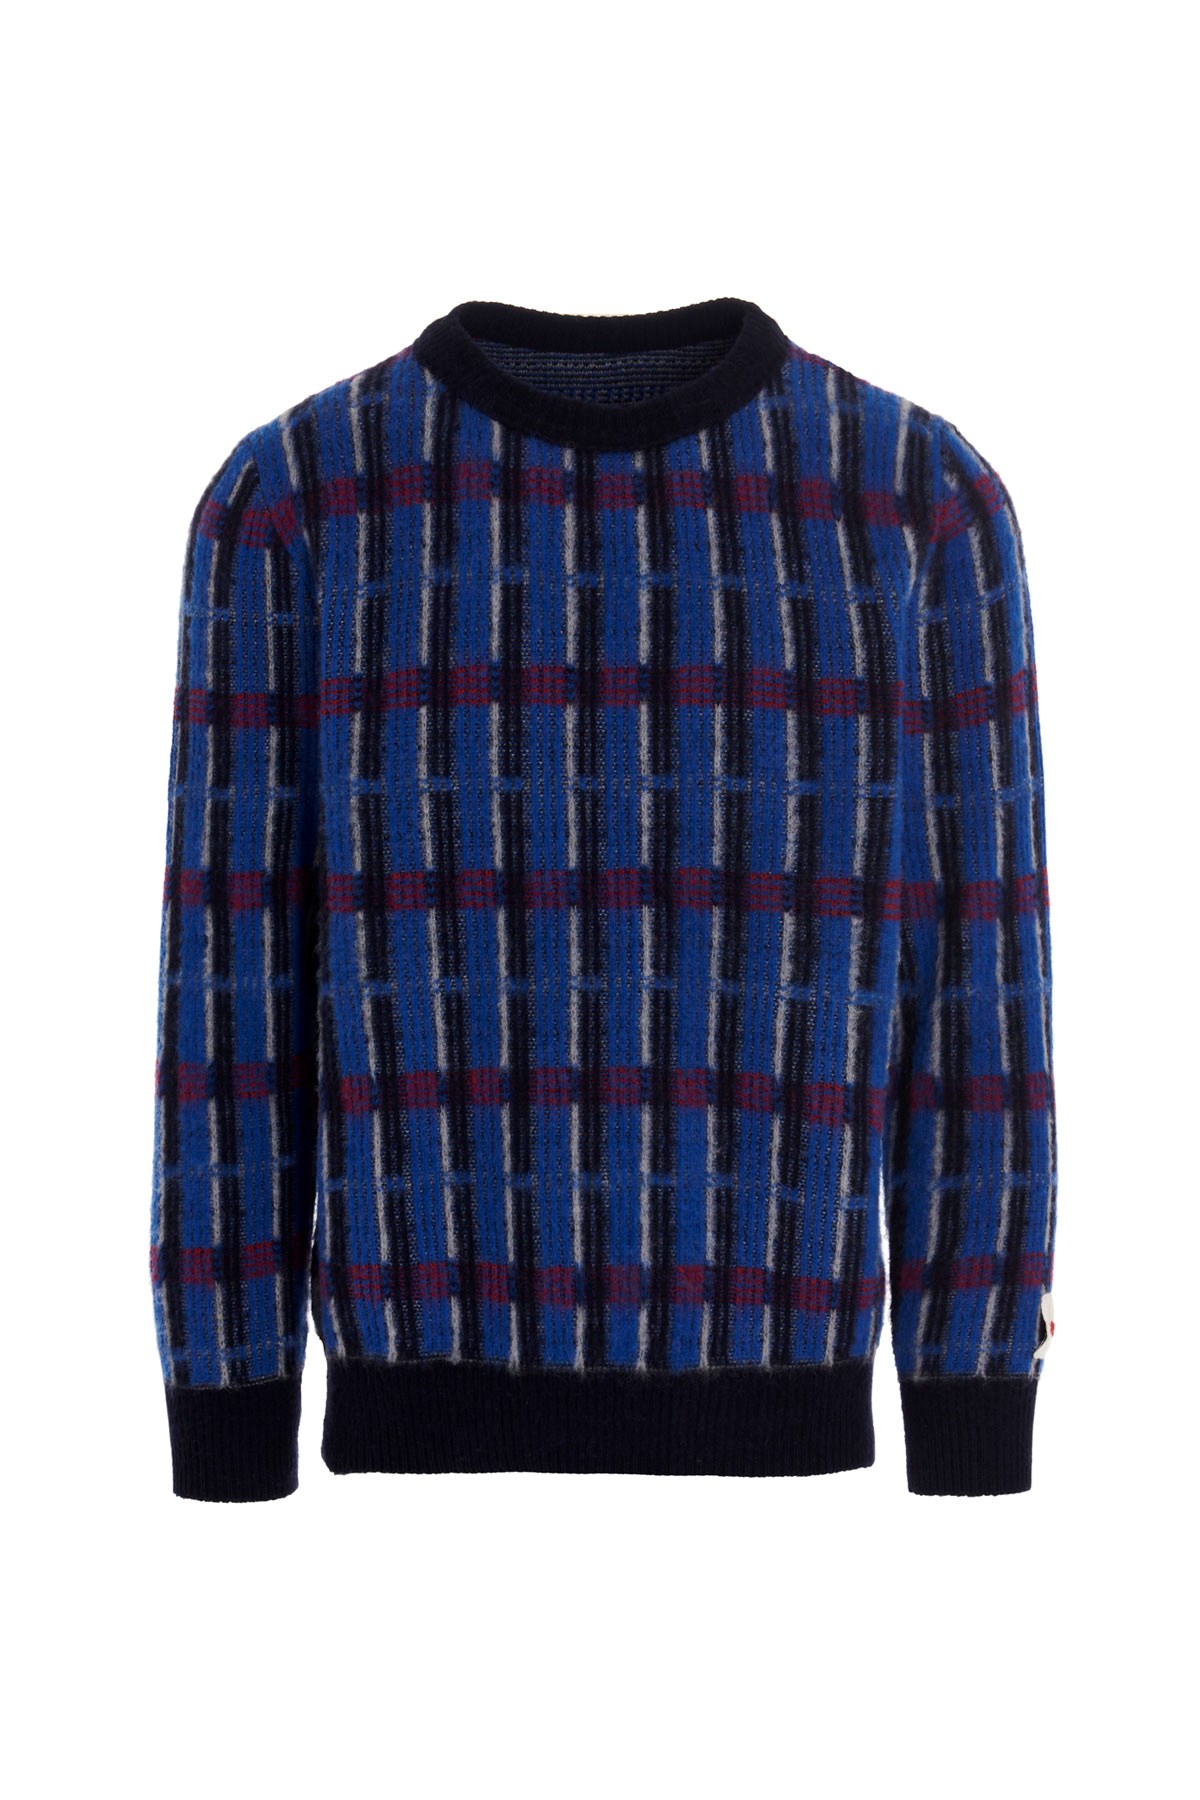 LONGO Jacquard Sweater